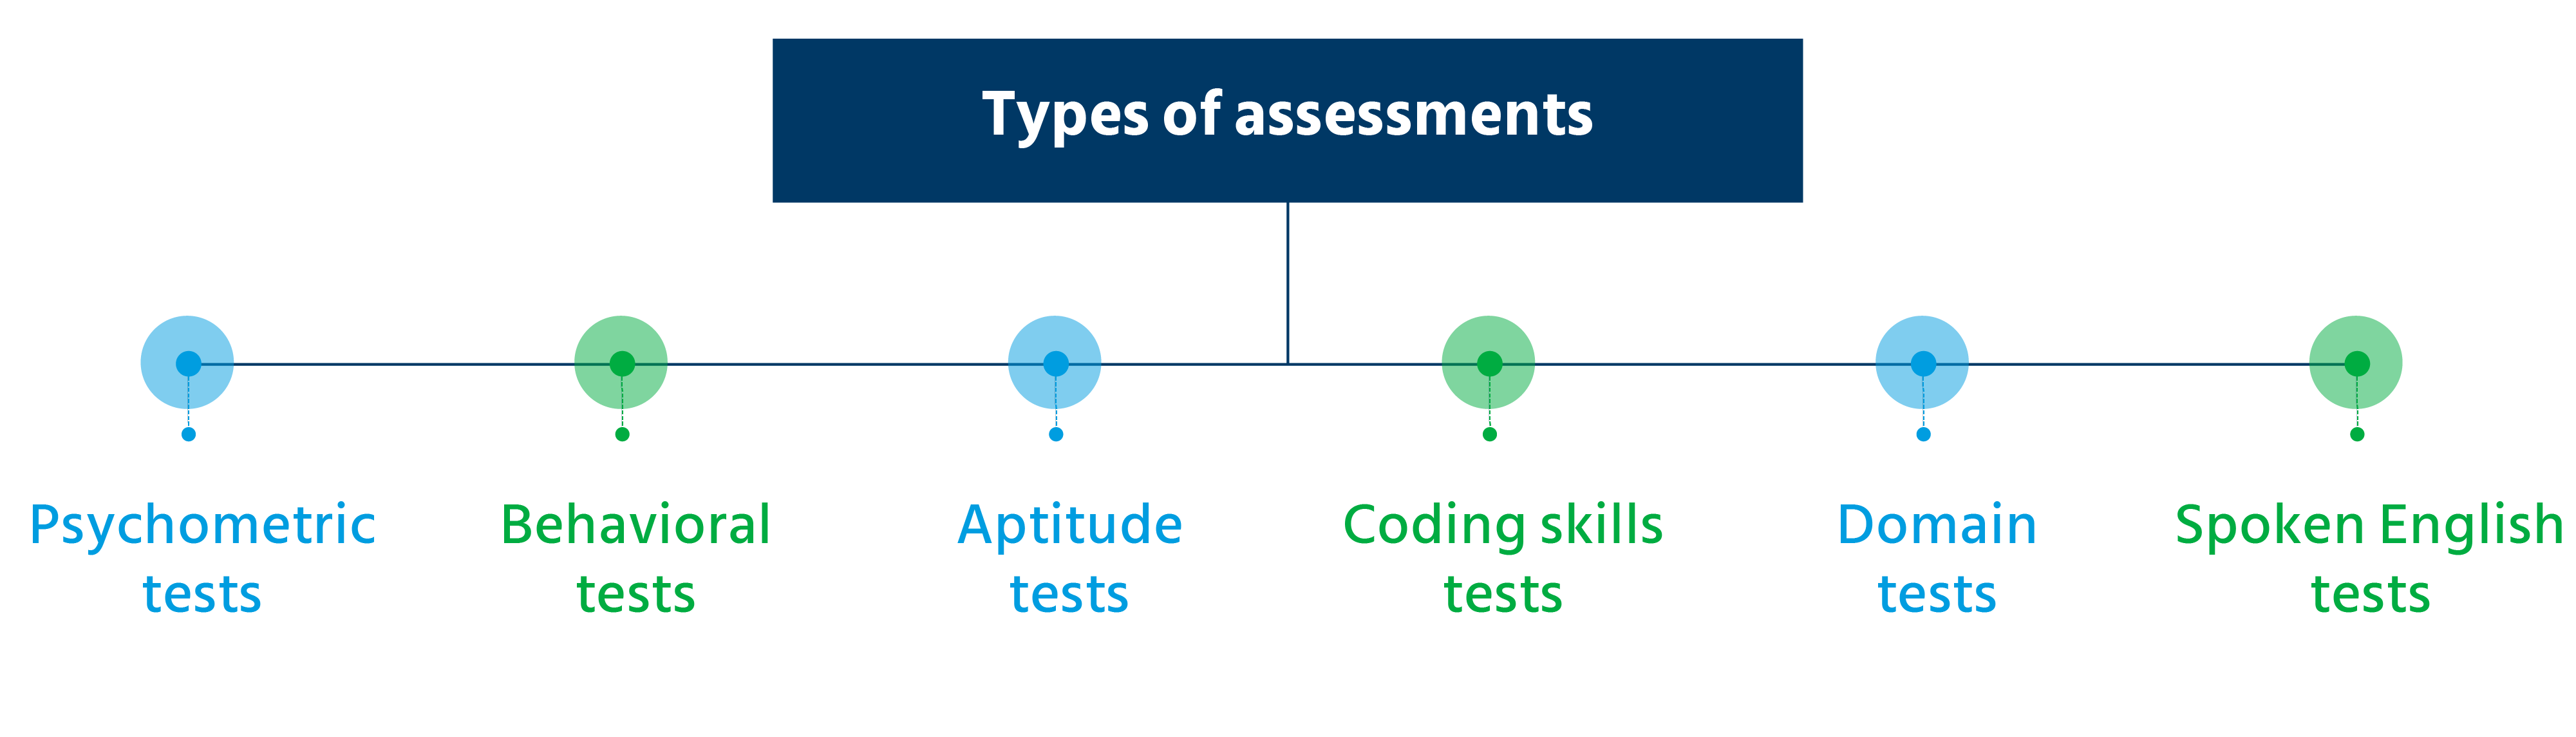 Assessment Platform Blog_Infographic 4